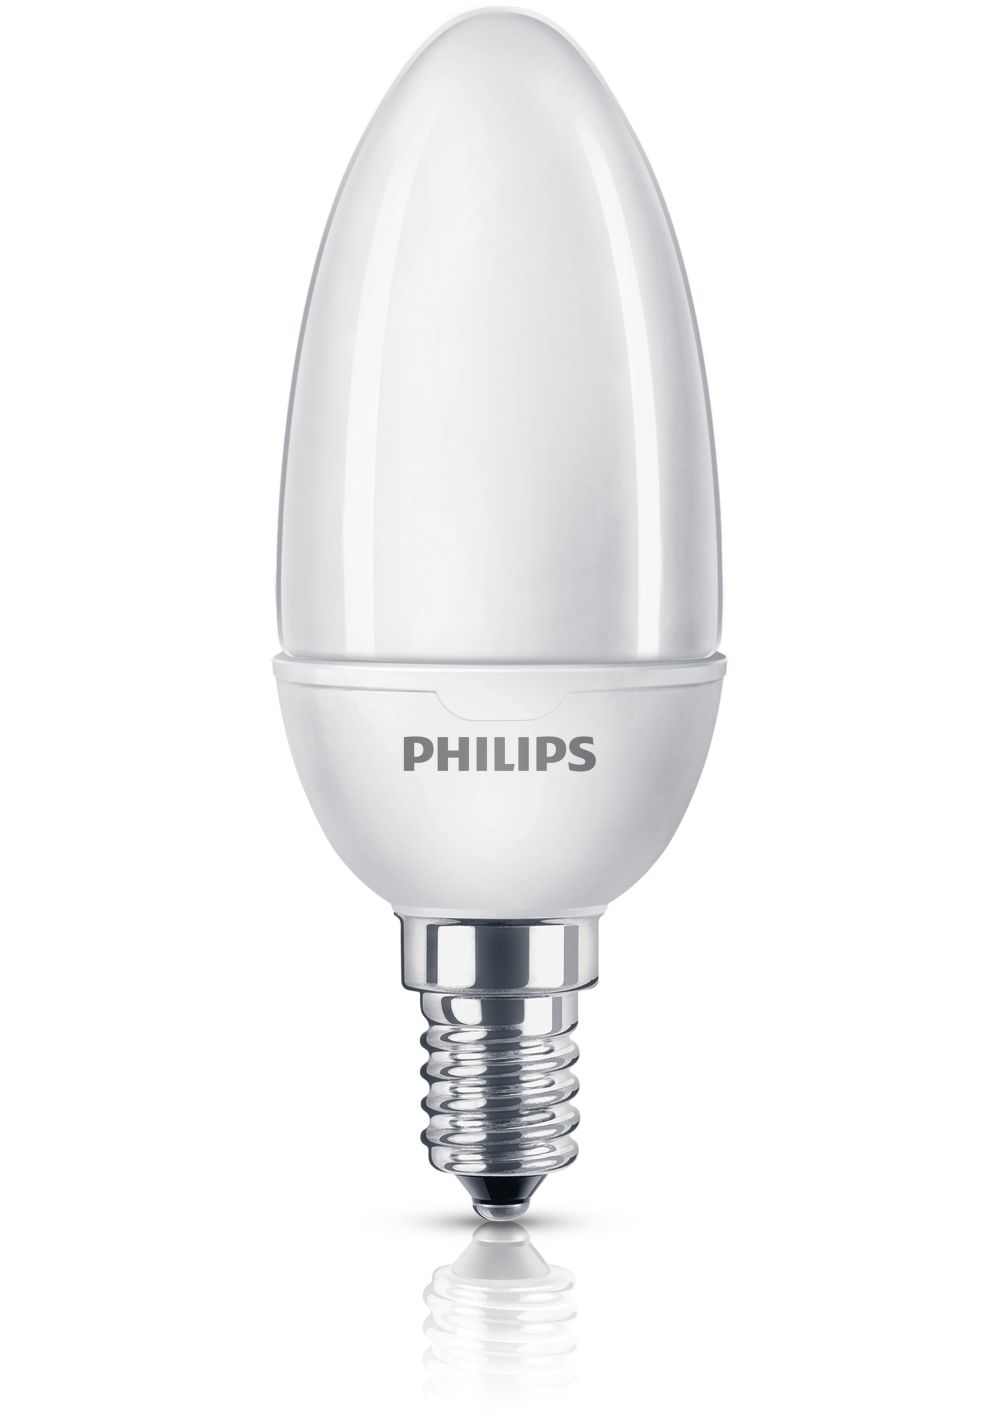 Image of Philips 2010085605